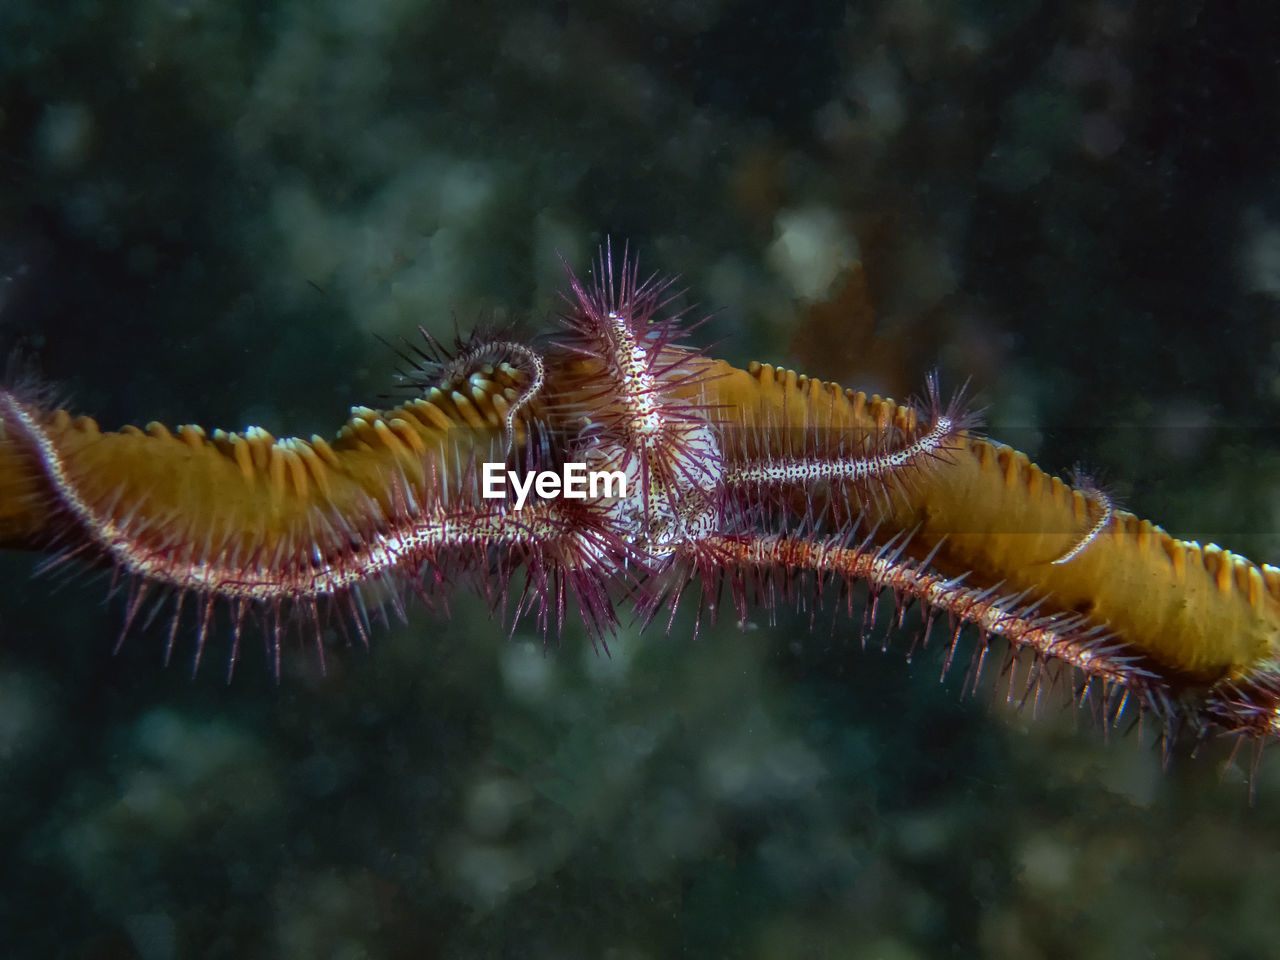 A brittle sea star-ophiuroidea sp.